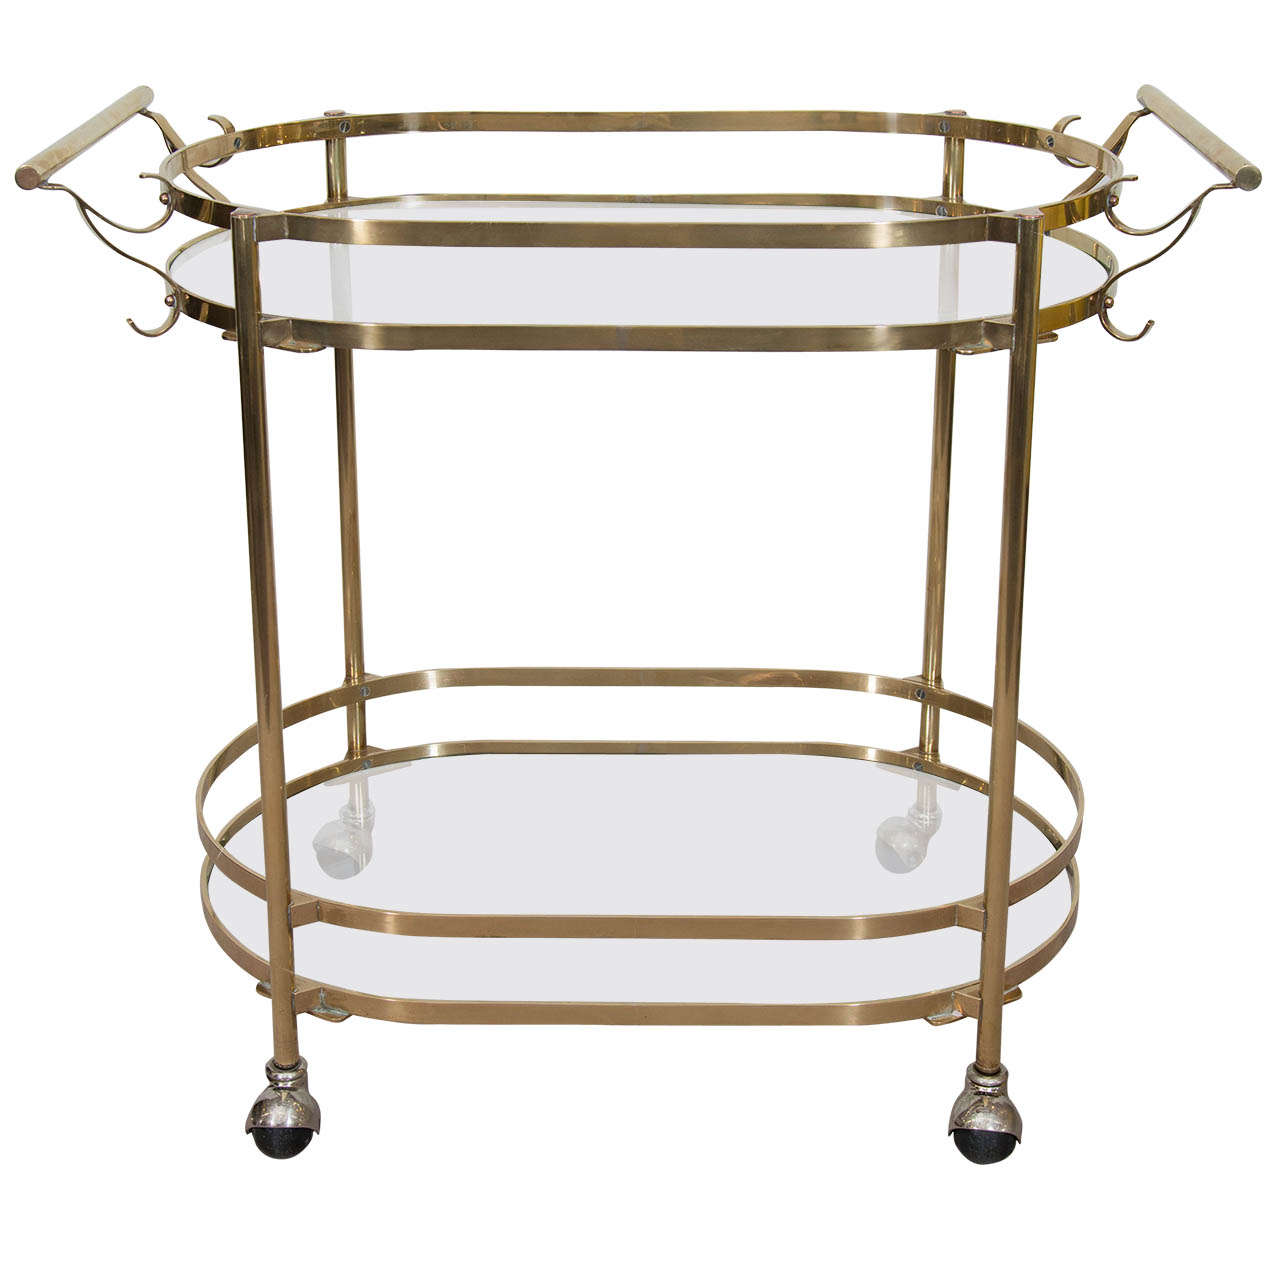 A Mid Century Italian Brass and Glass Bar Cart